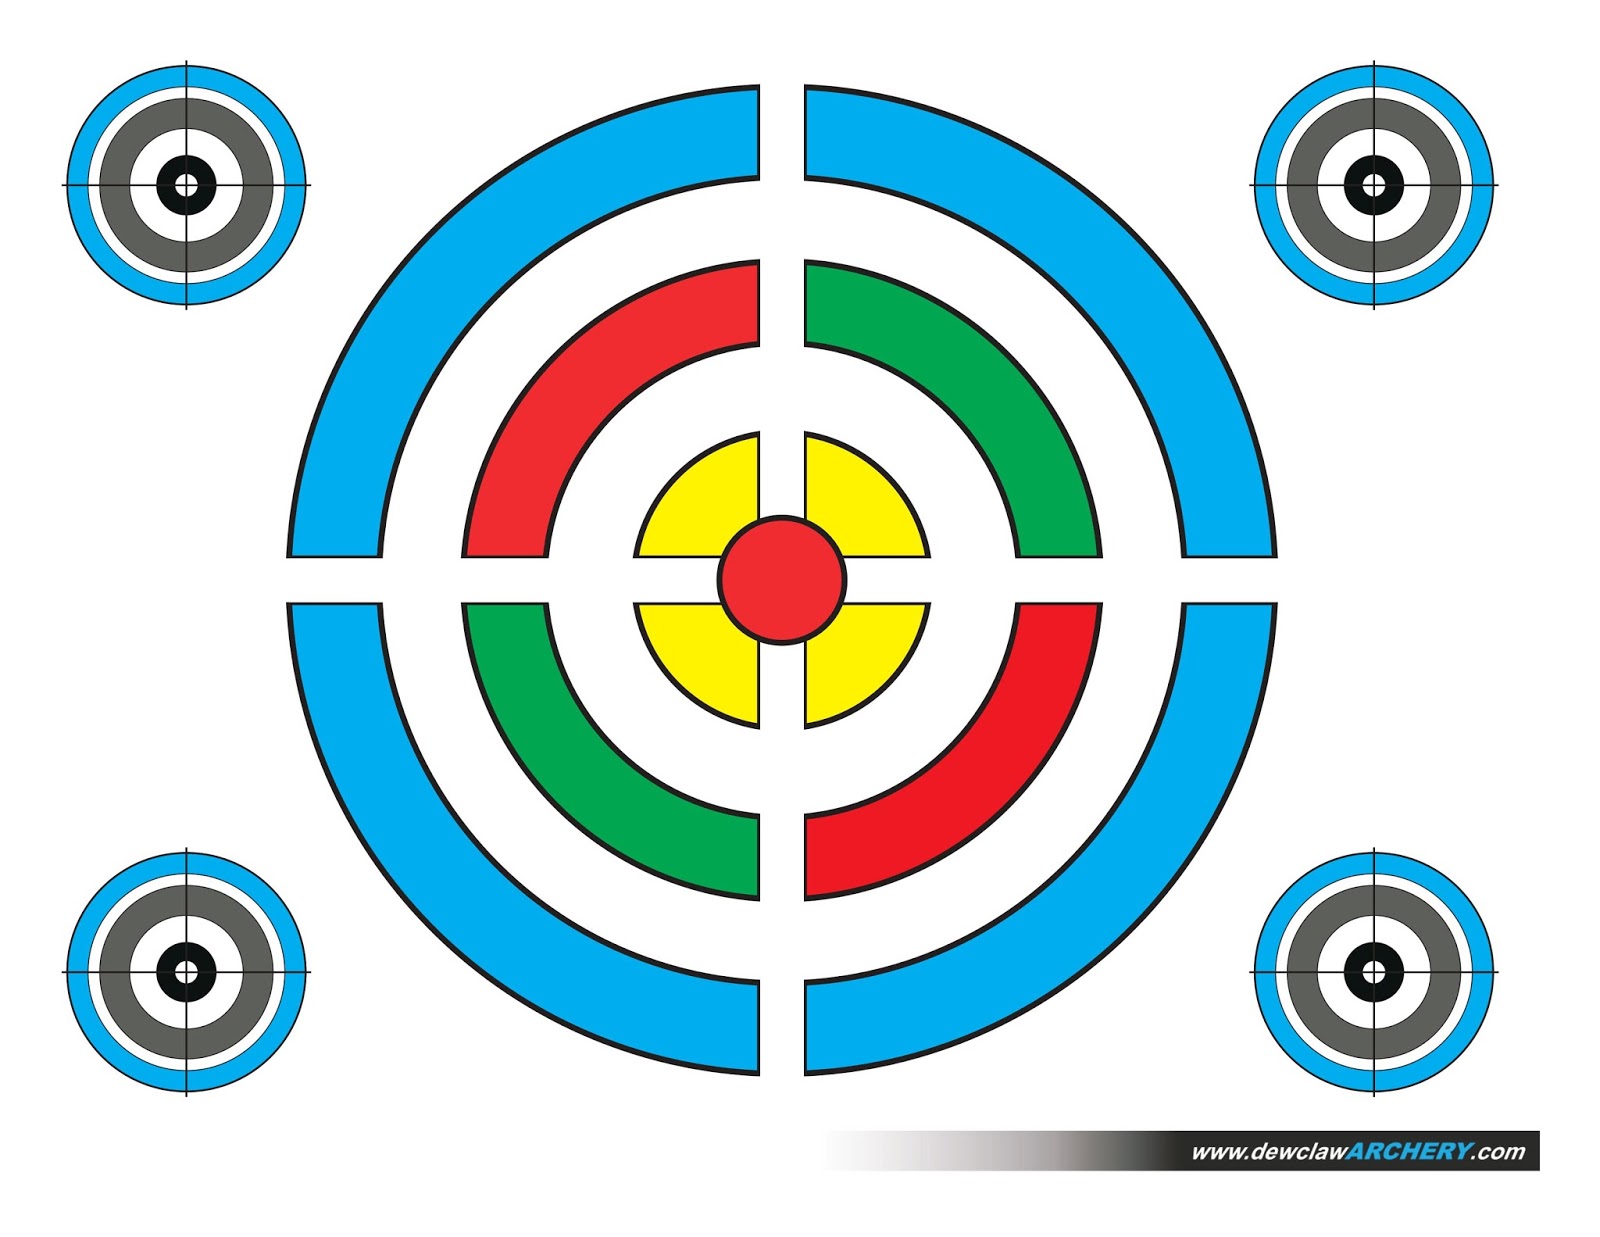 raspecatai i strelyai kruglye miseni 14 circle targets 14.